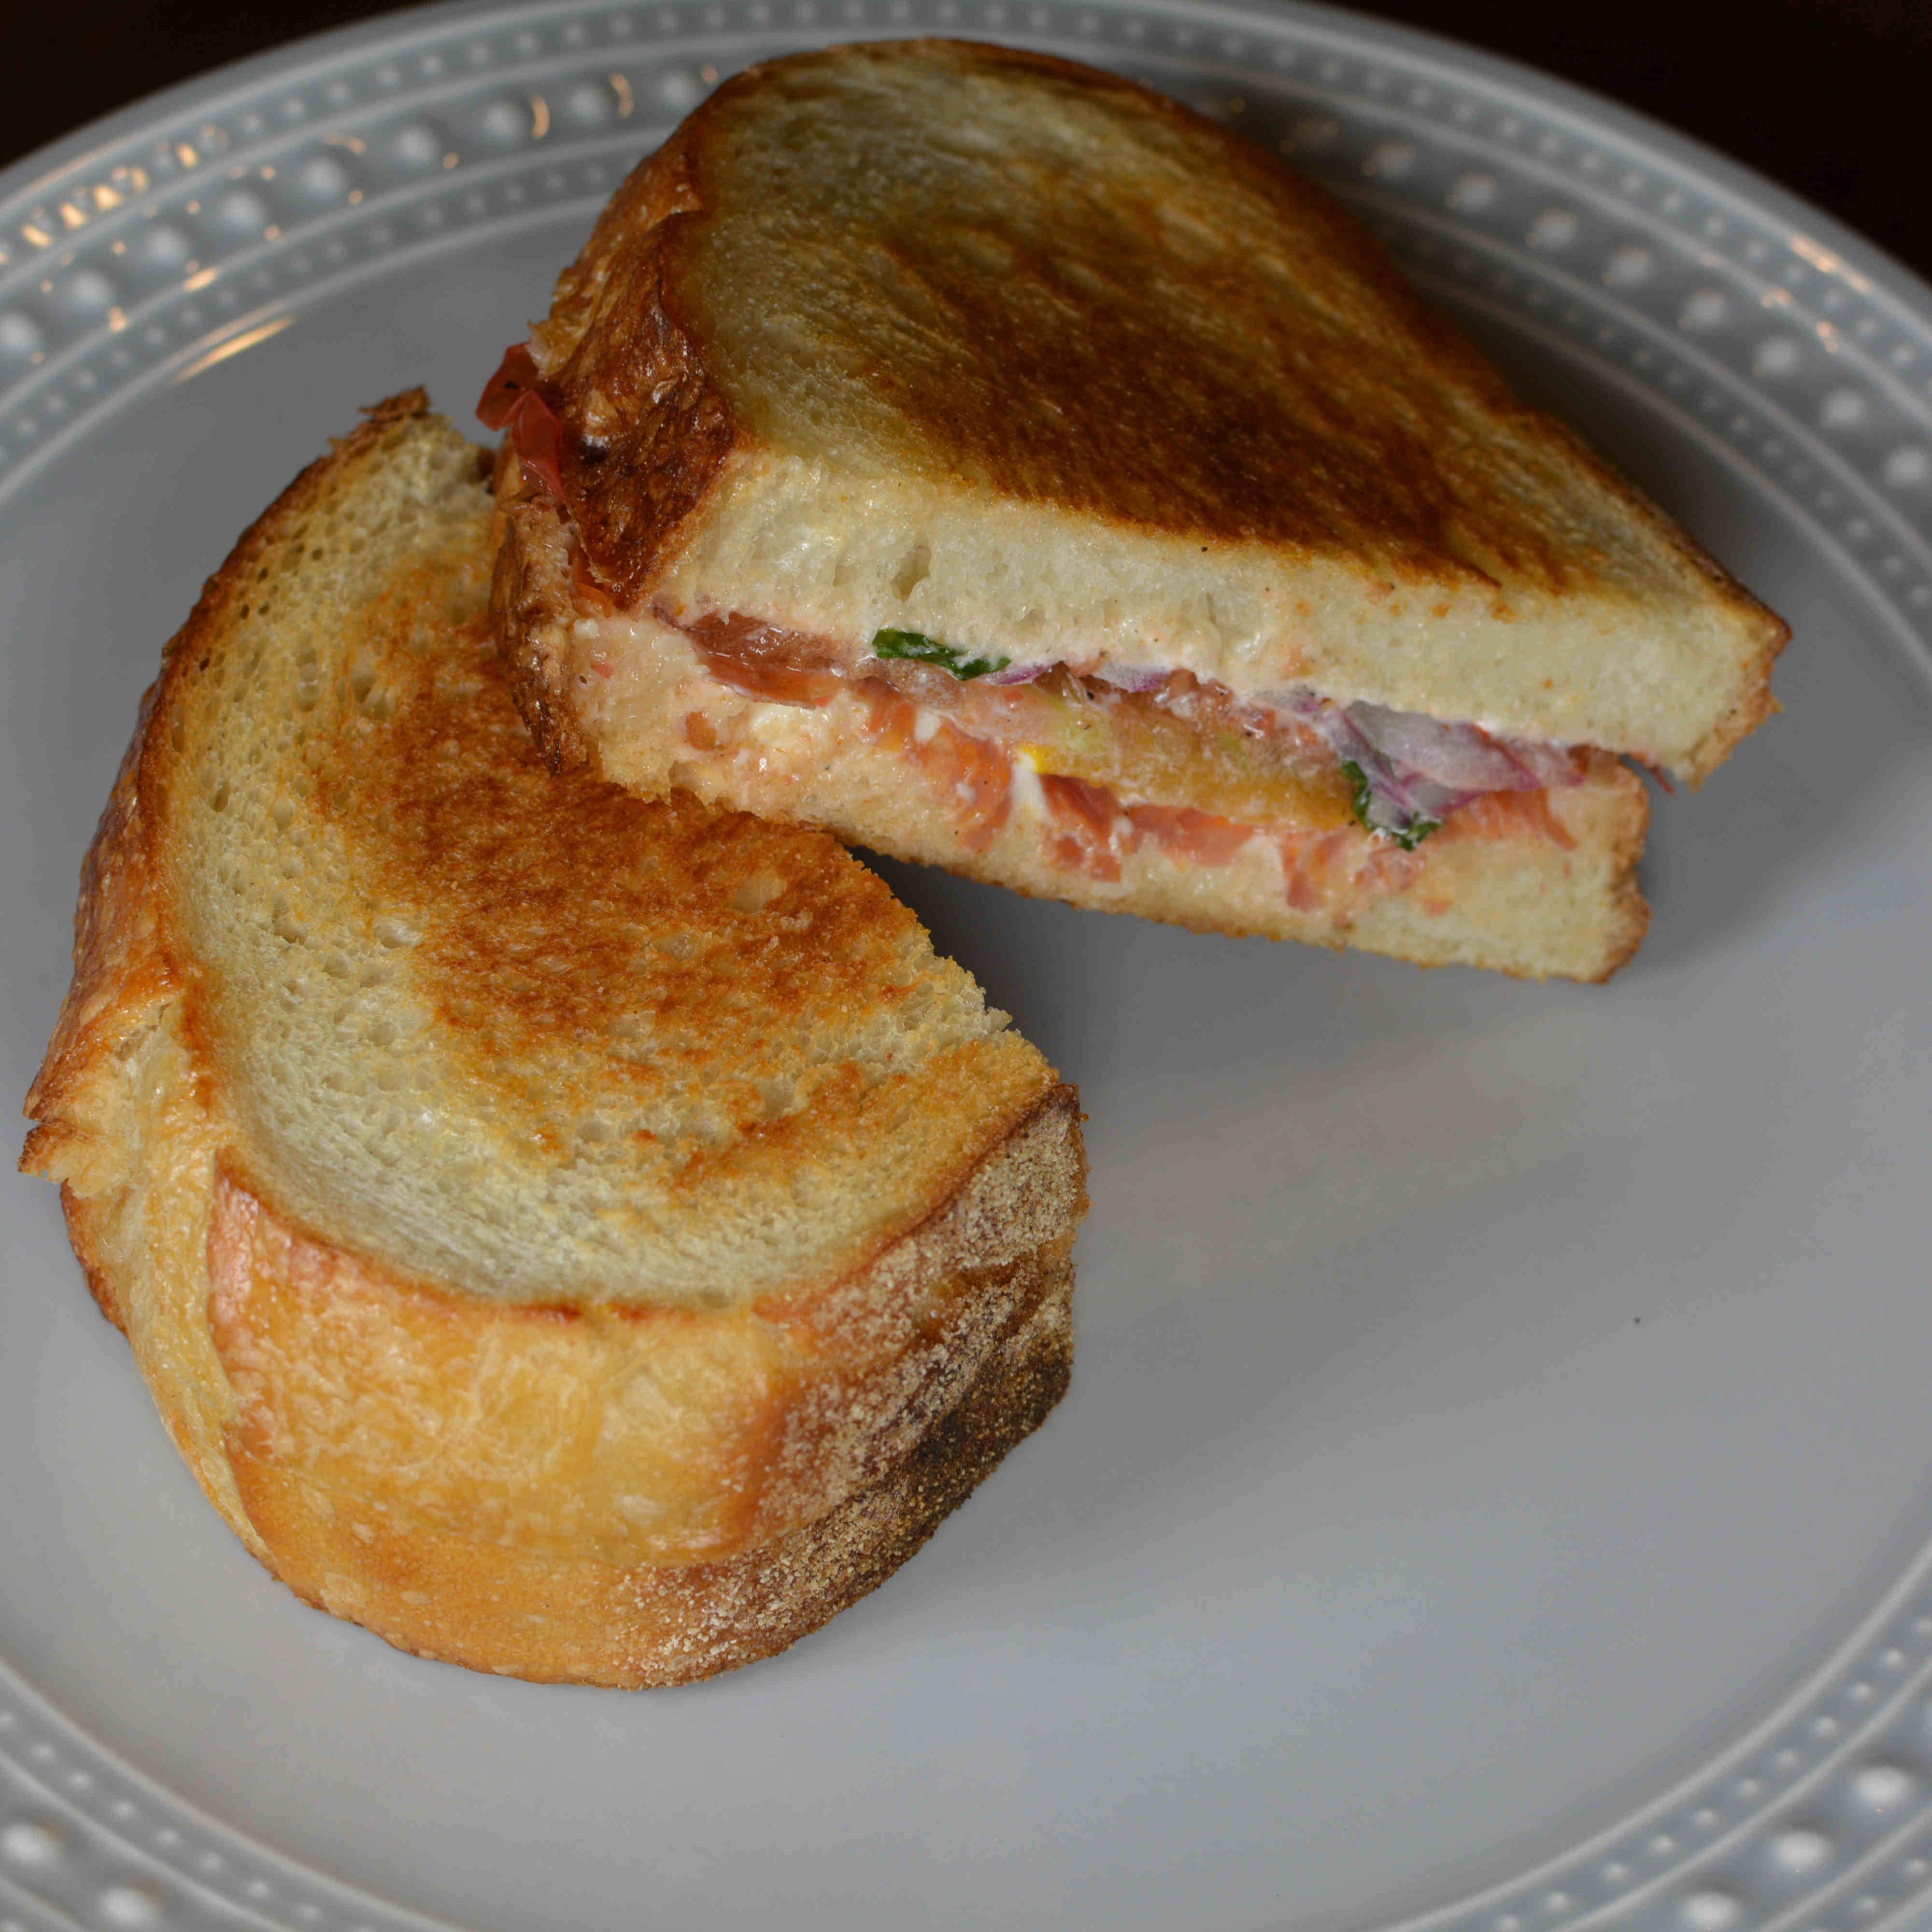  Heirloom Tomato & Mayo Sandwich